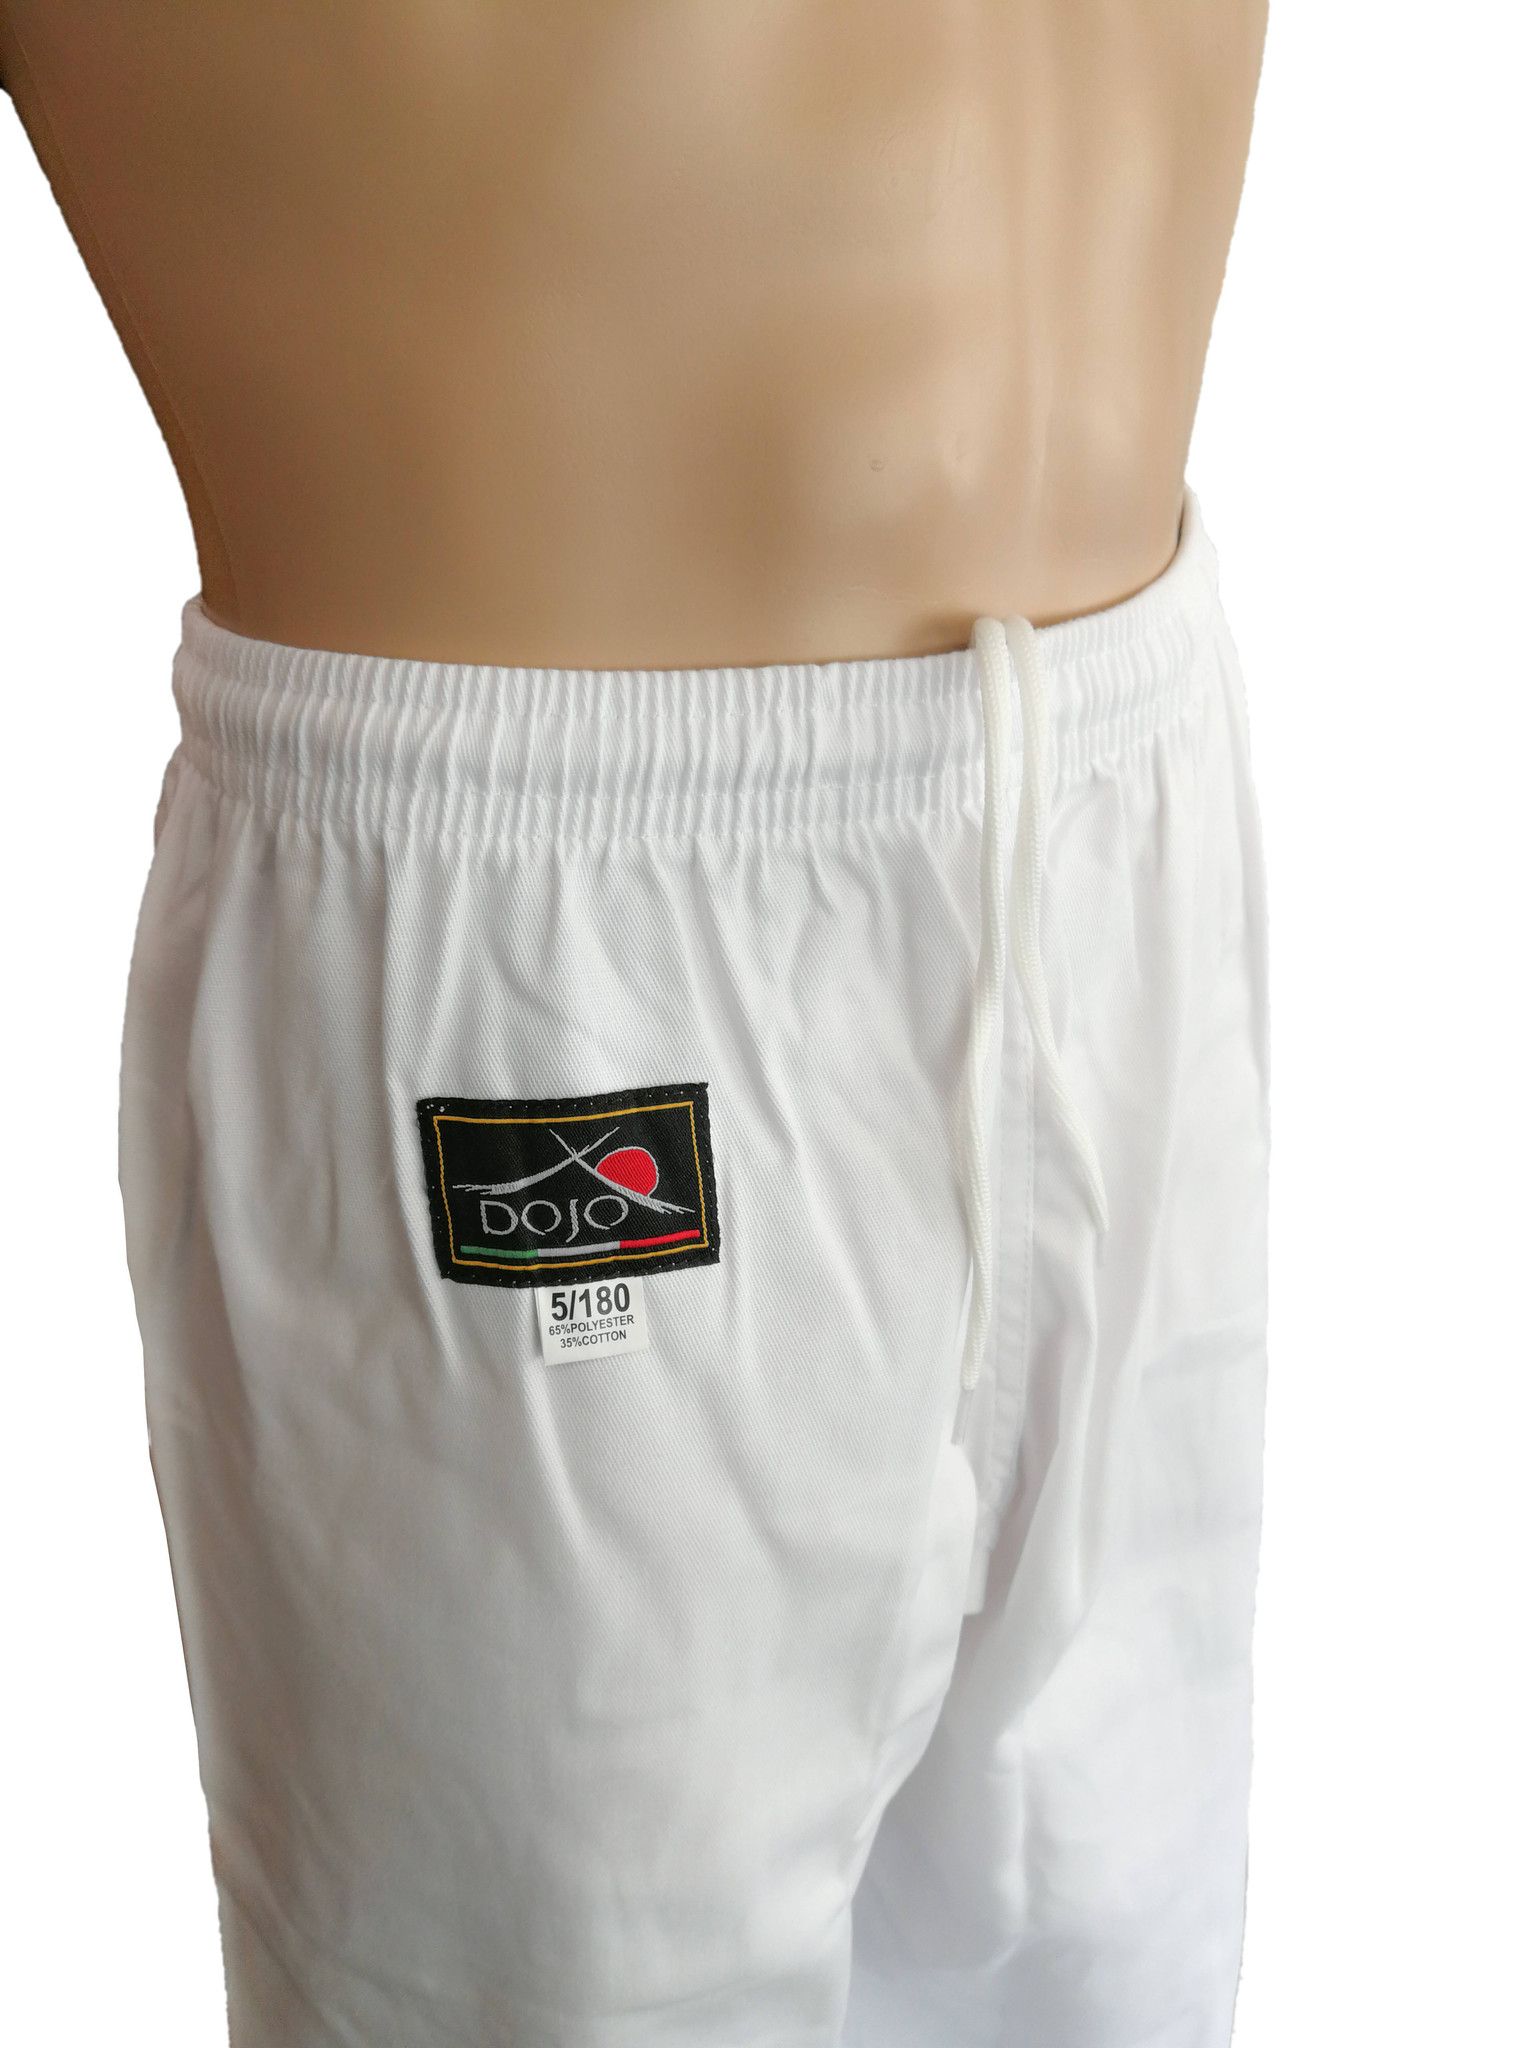 Dojo - Pantalone per Karate Training